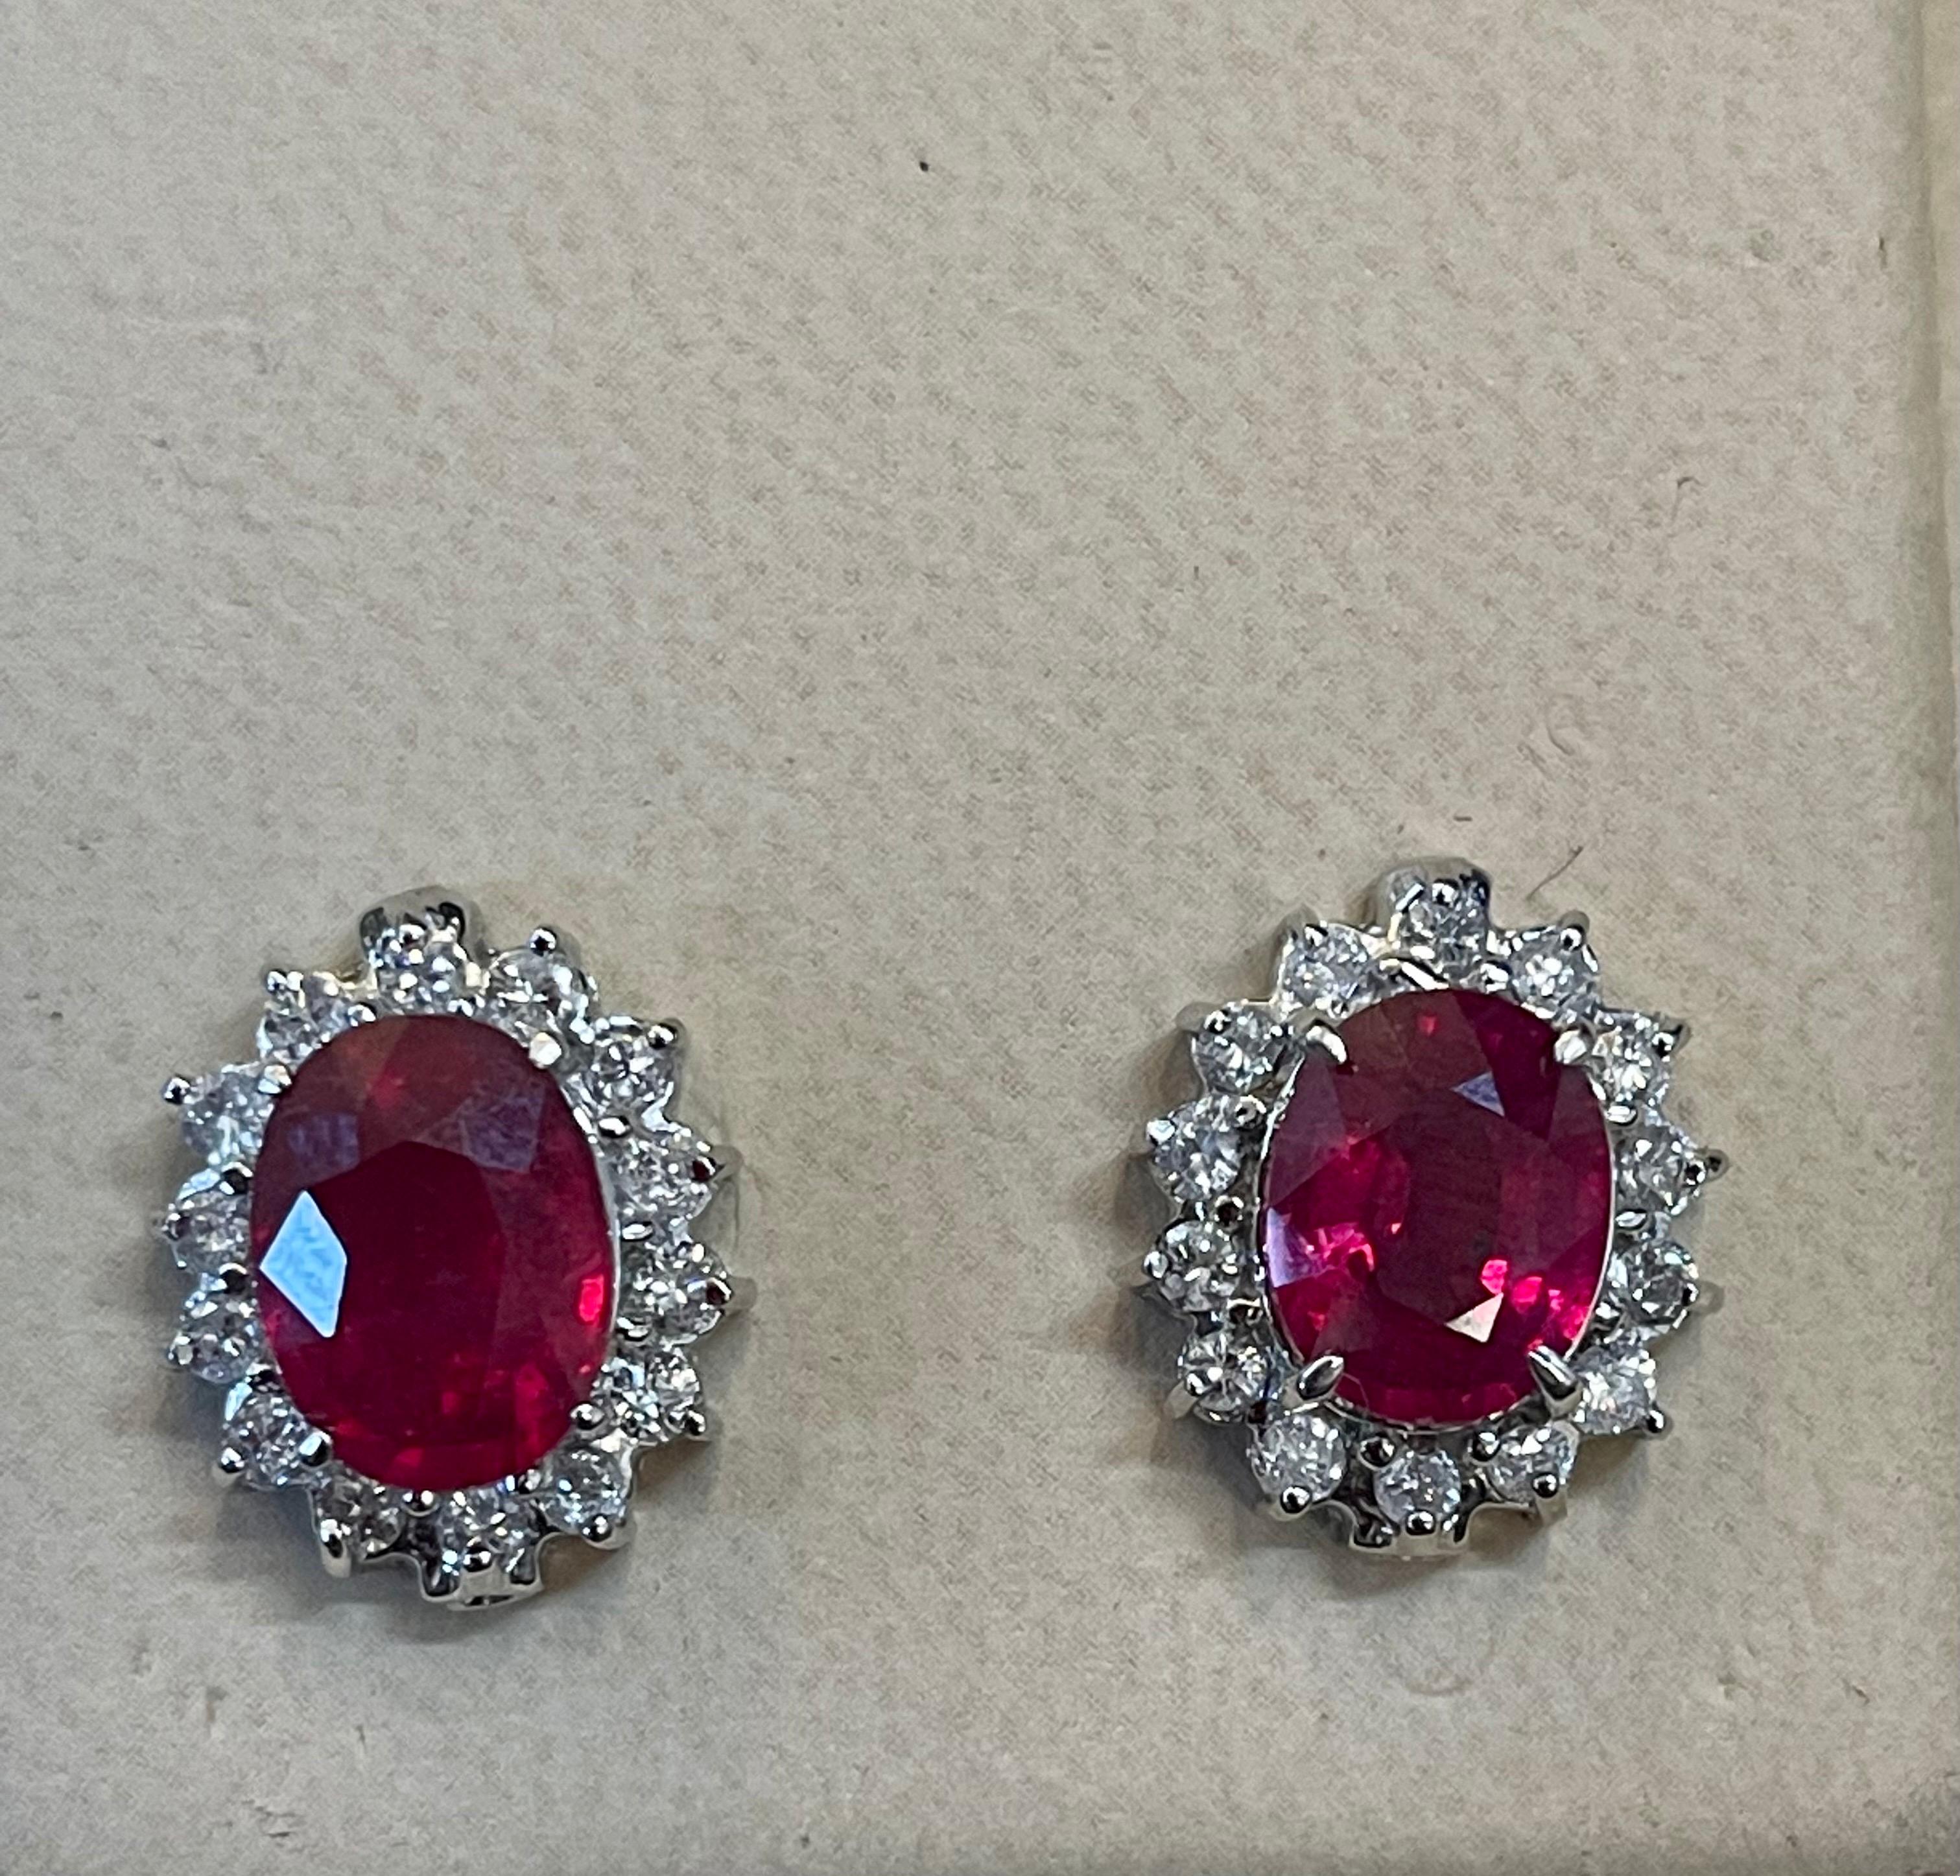 6 Carat Oval Treated Ruby & 1.2 Ct Diamond Stud Earrings 14 Karat White Gold For Sale 2